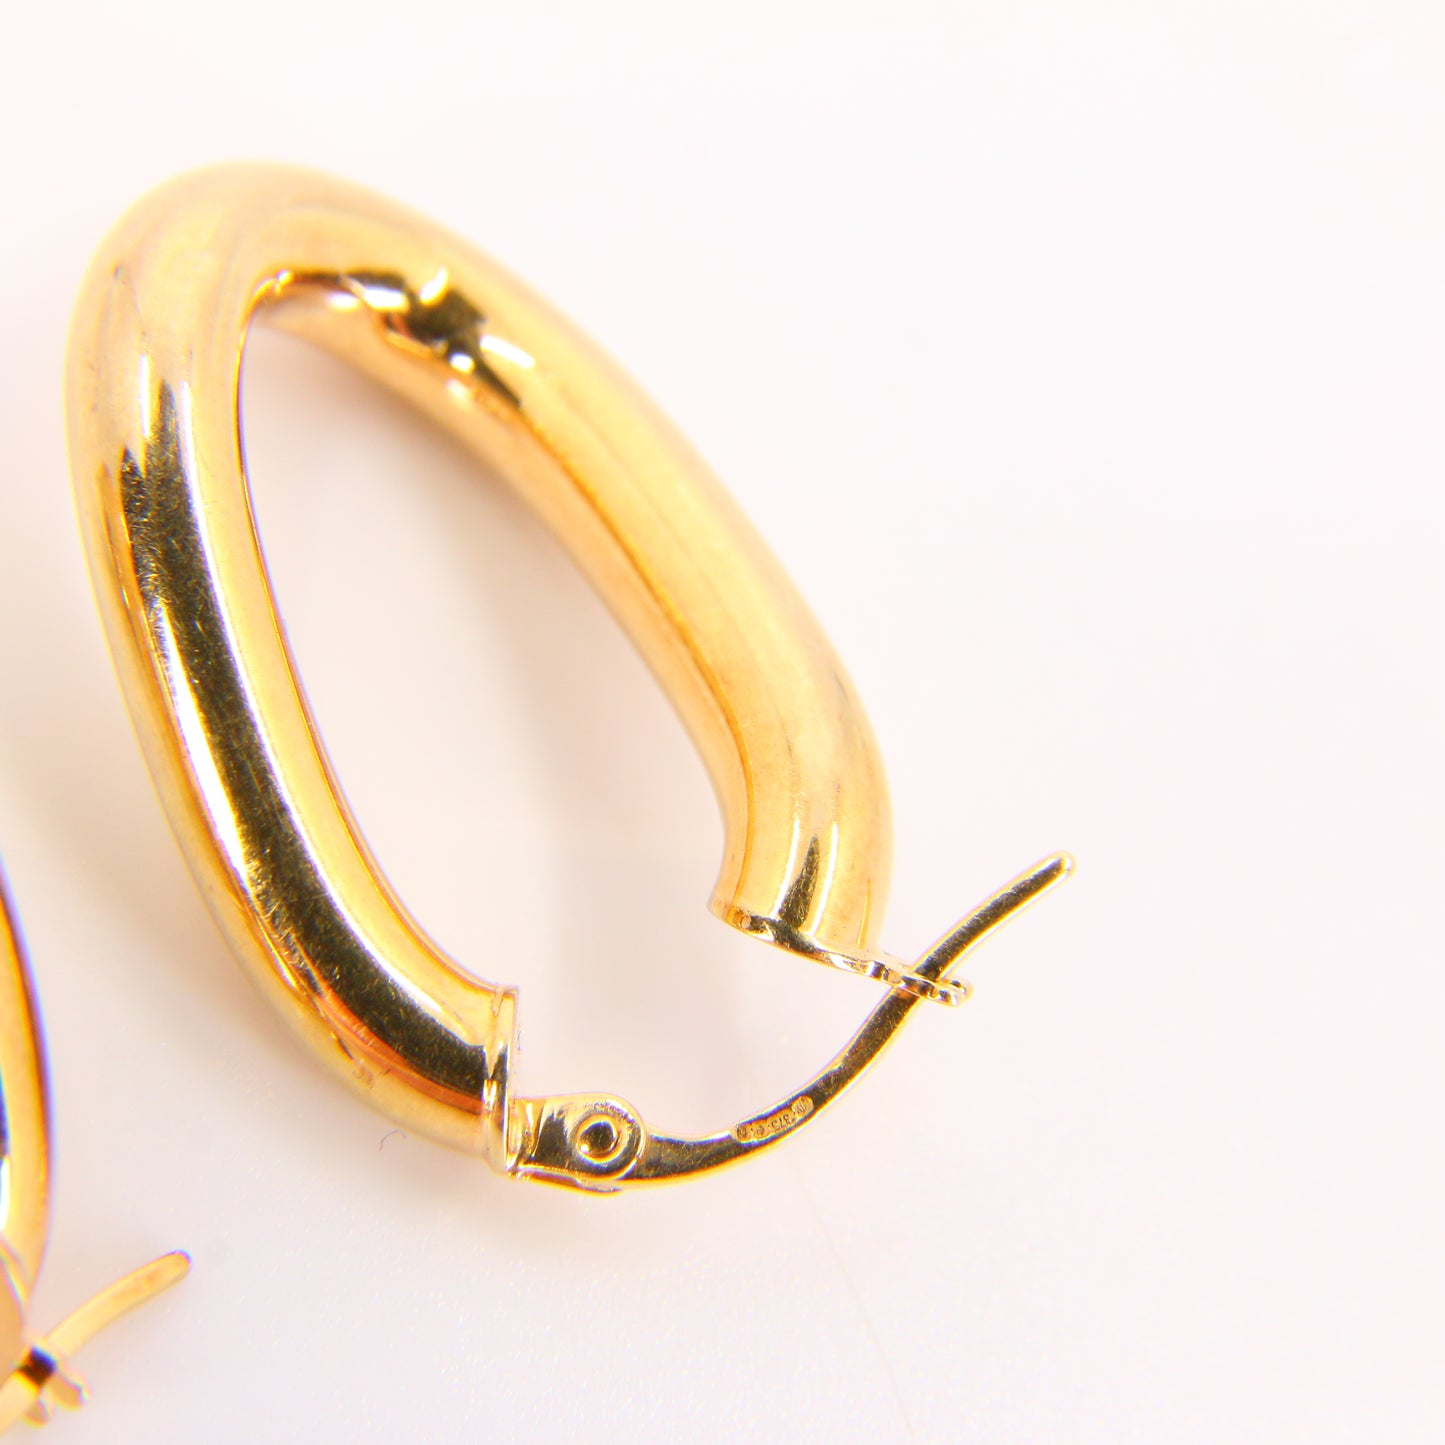 Vintage 9ct Twist Hoop Earrings Hallmarked Yellow Gold 9 Carat Boxed Gift